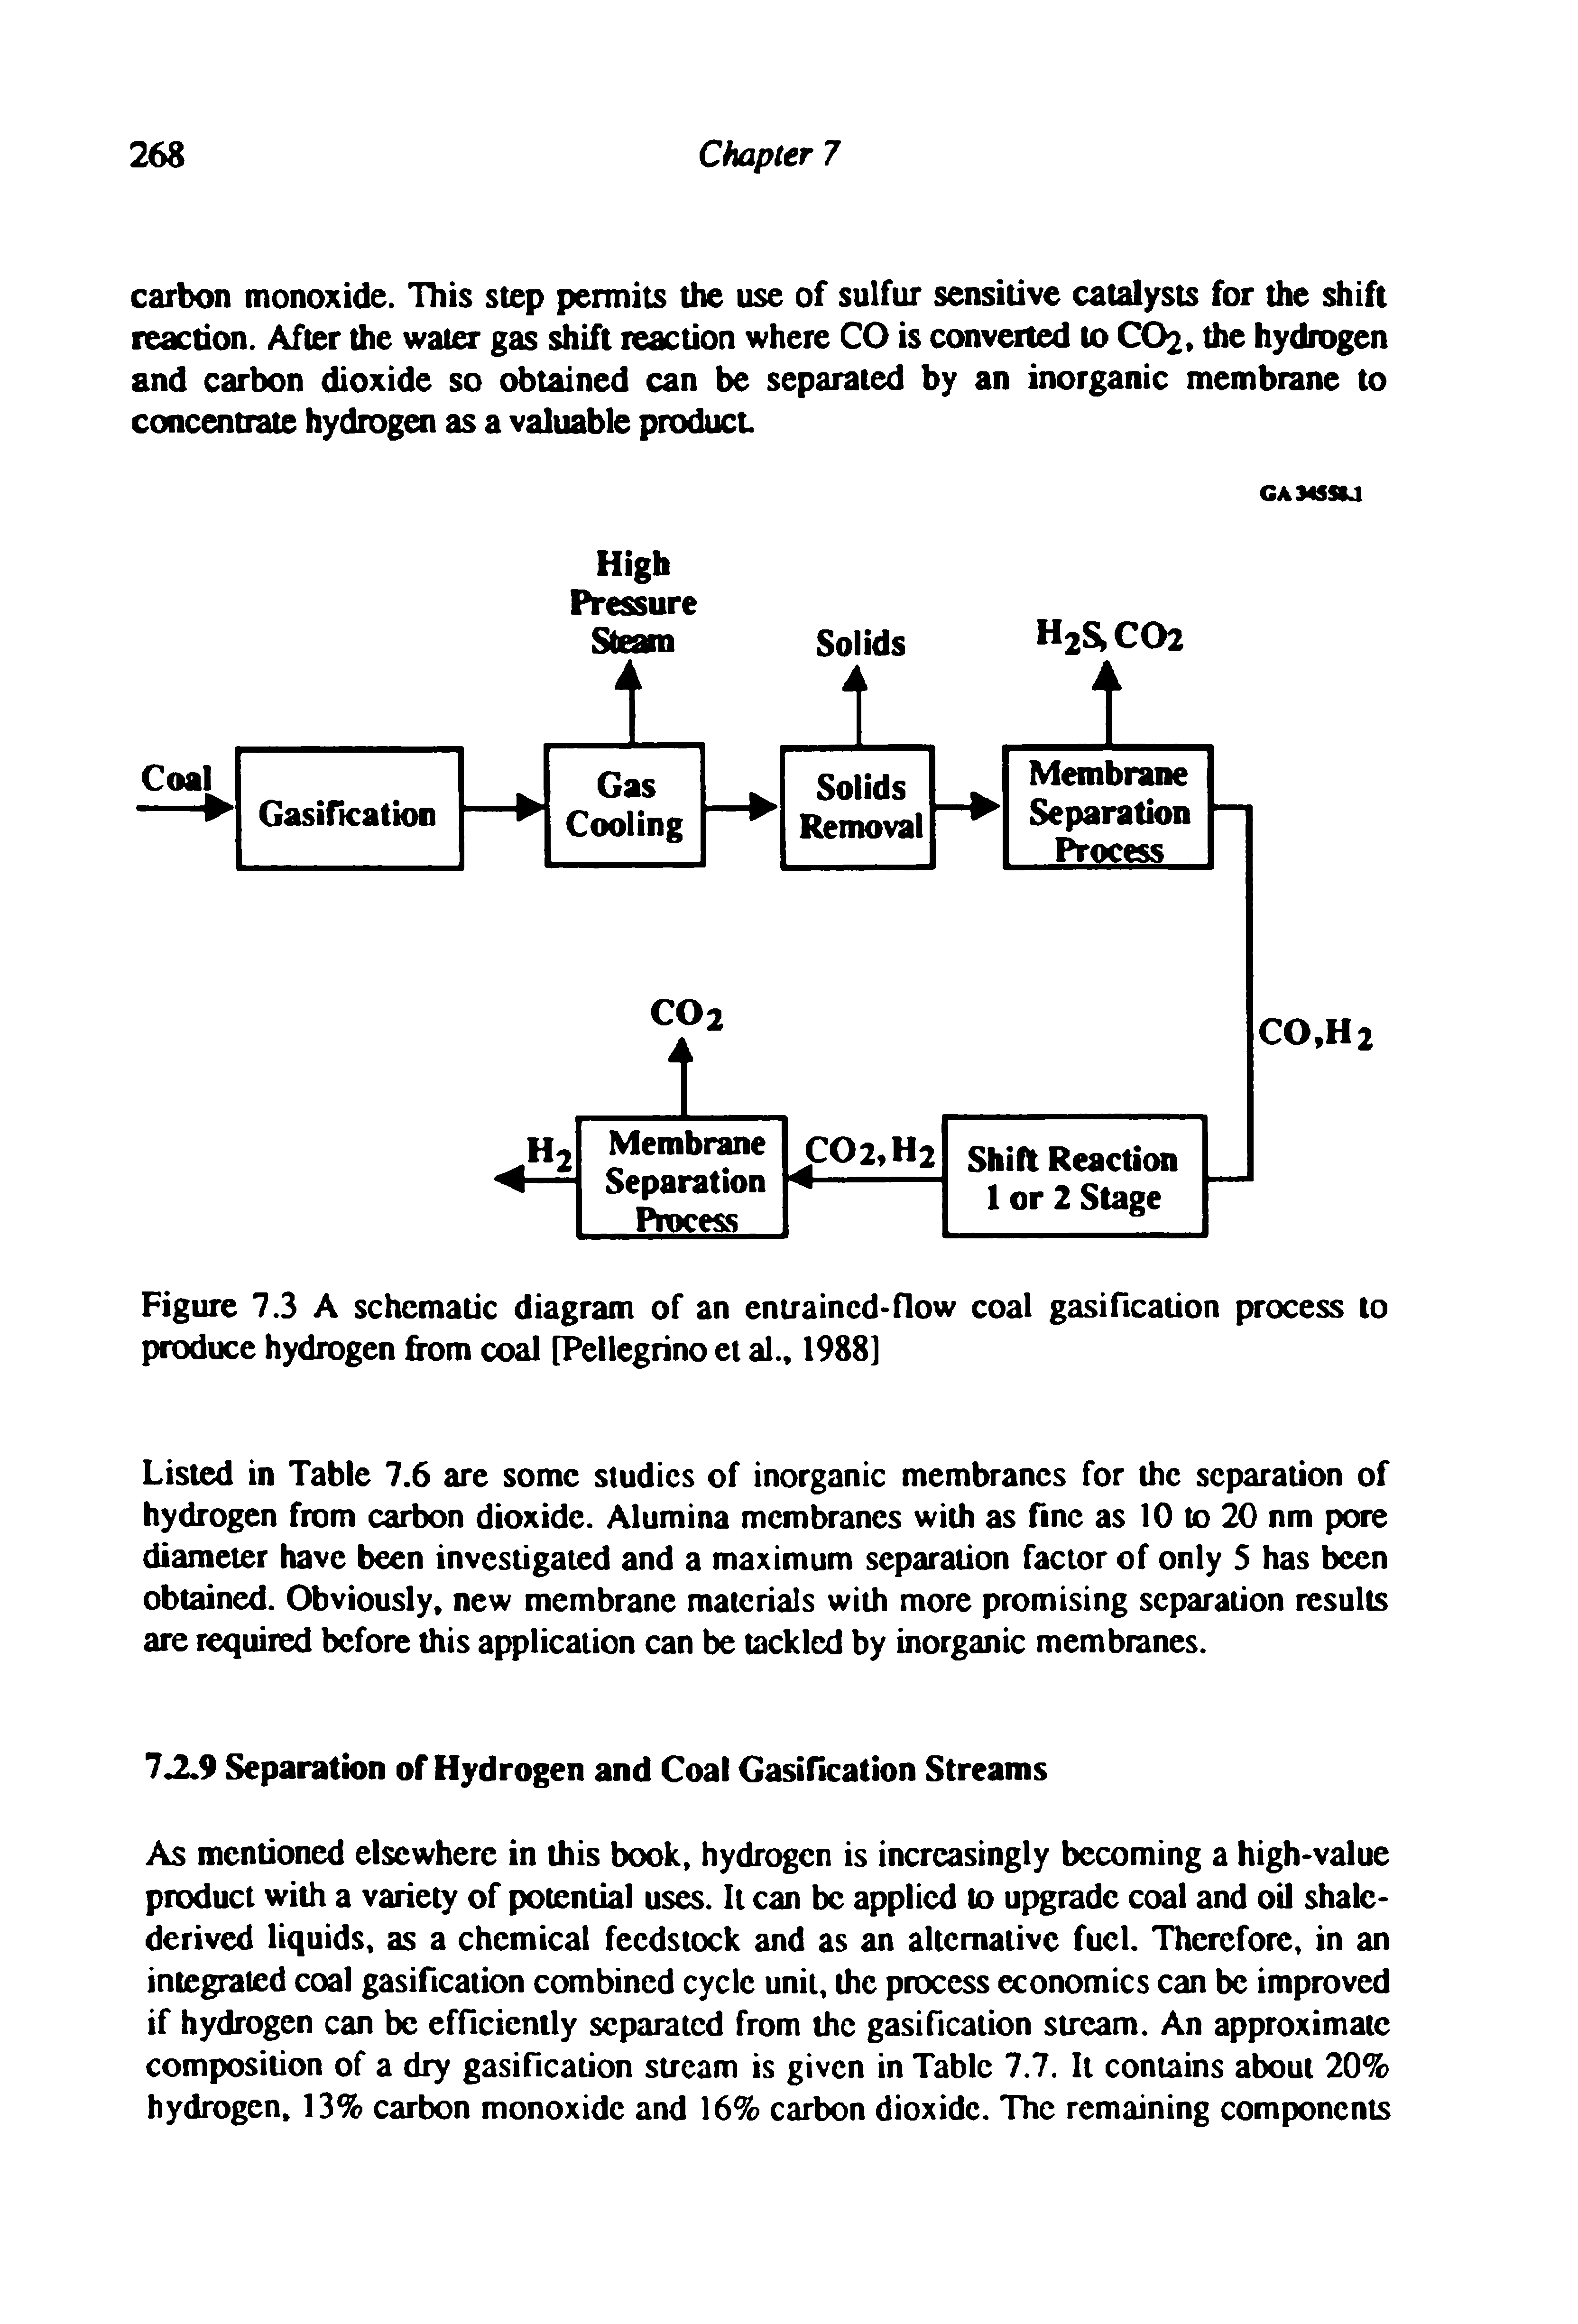 Figure 7.3 A schematic diagram of an entraincd>flow coal gasification process to produce hydrogen from coal [Pellegrino el al., 1988]...